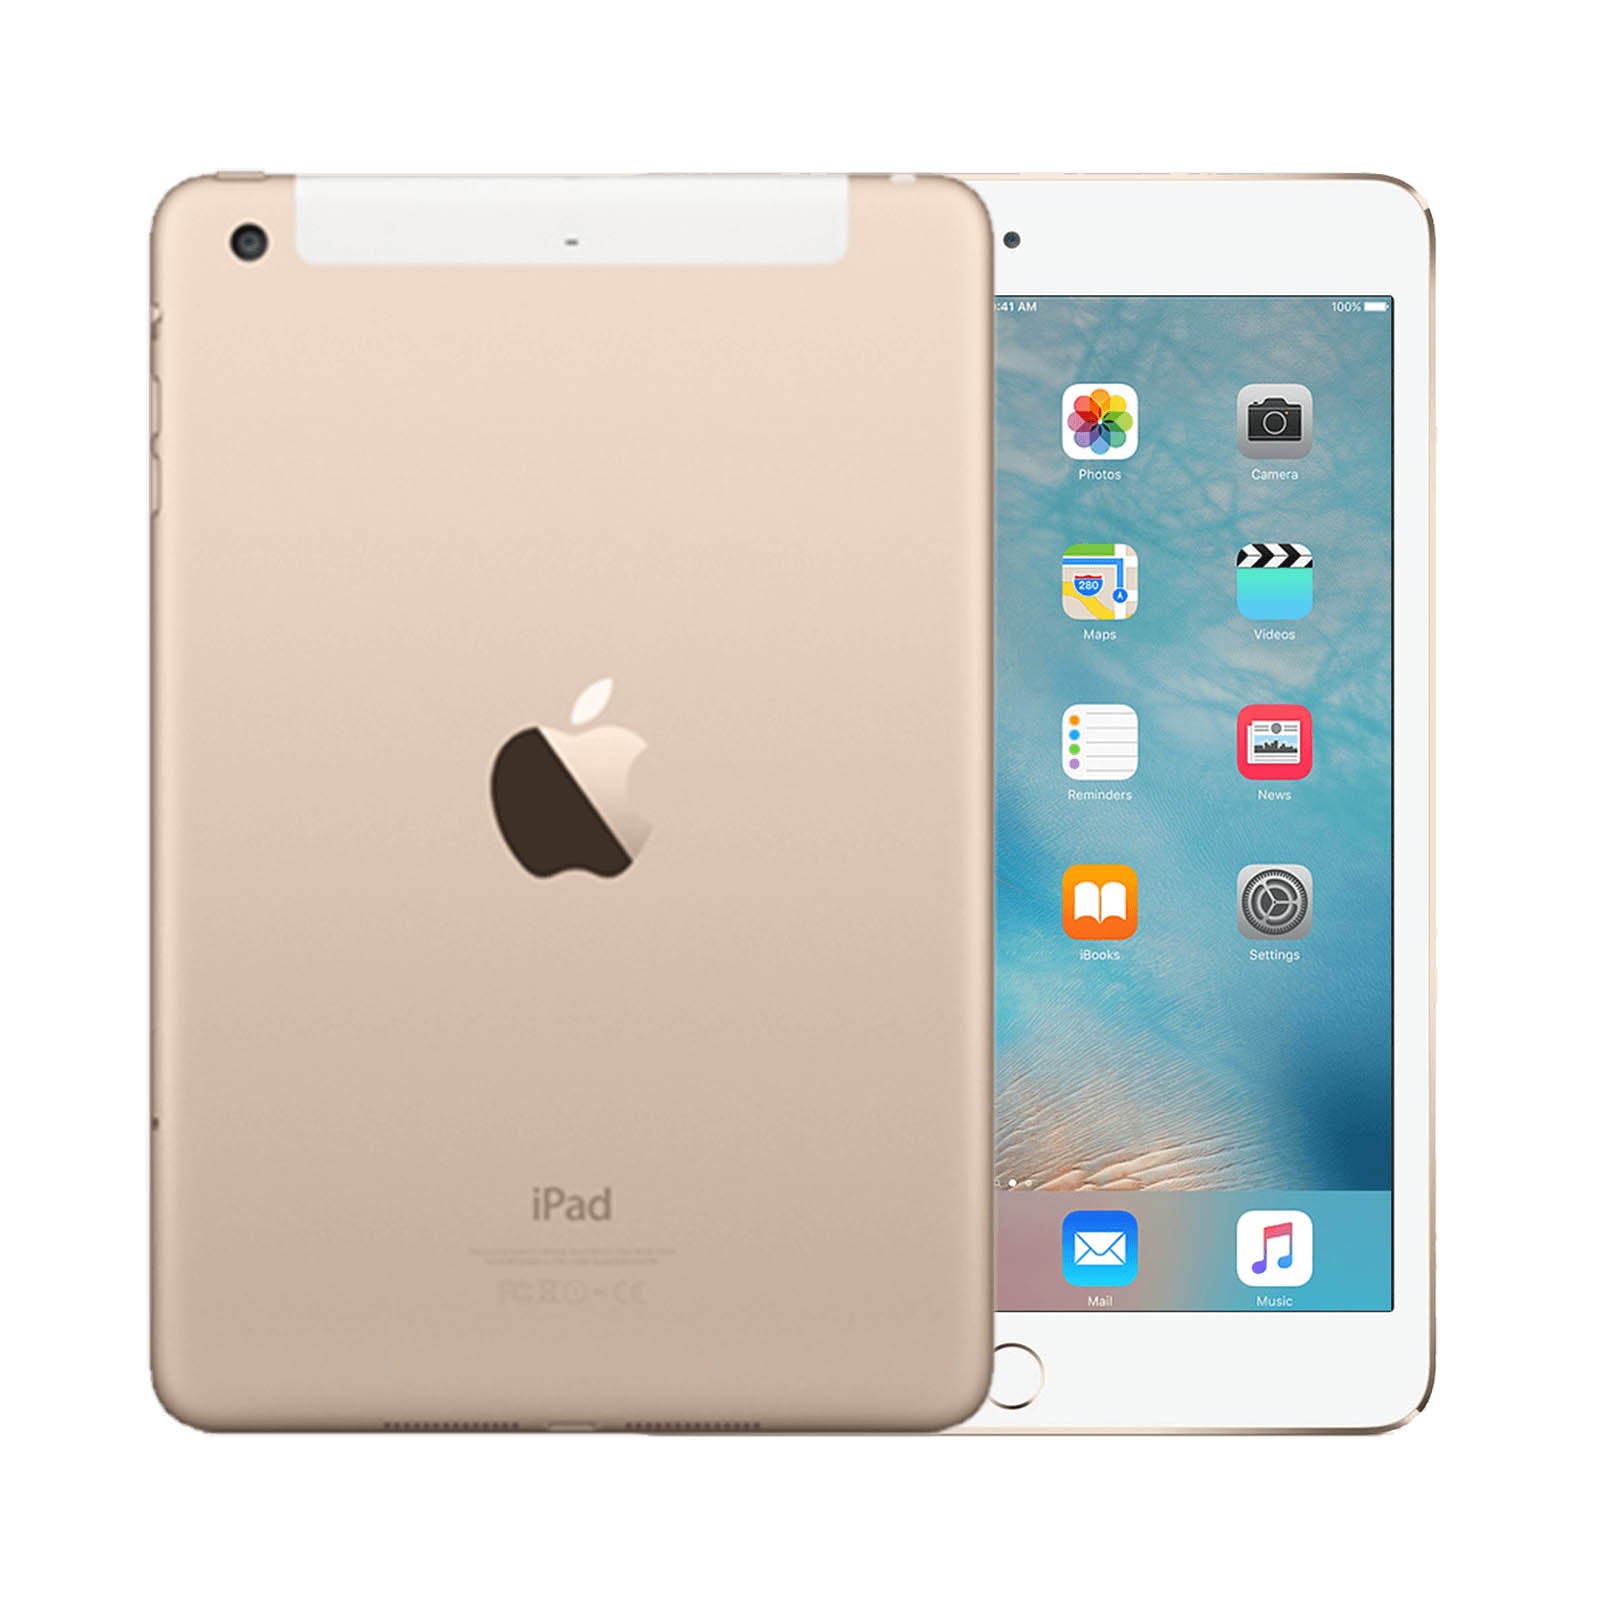 Apple iPad mini 3 32GB Gold Good - Unlocked